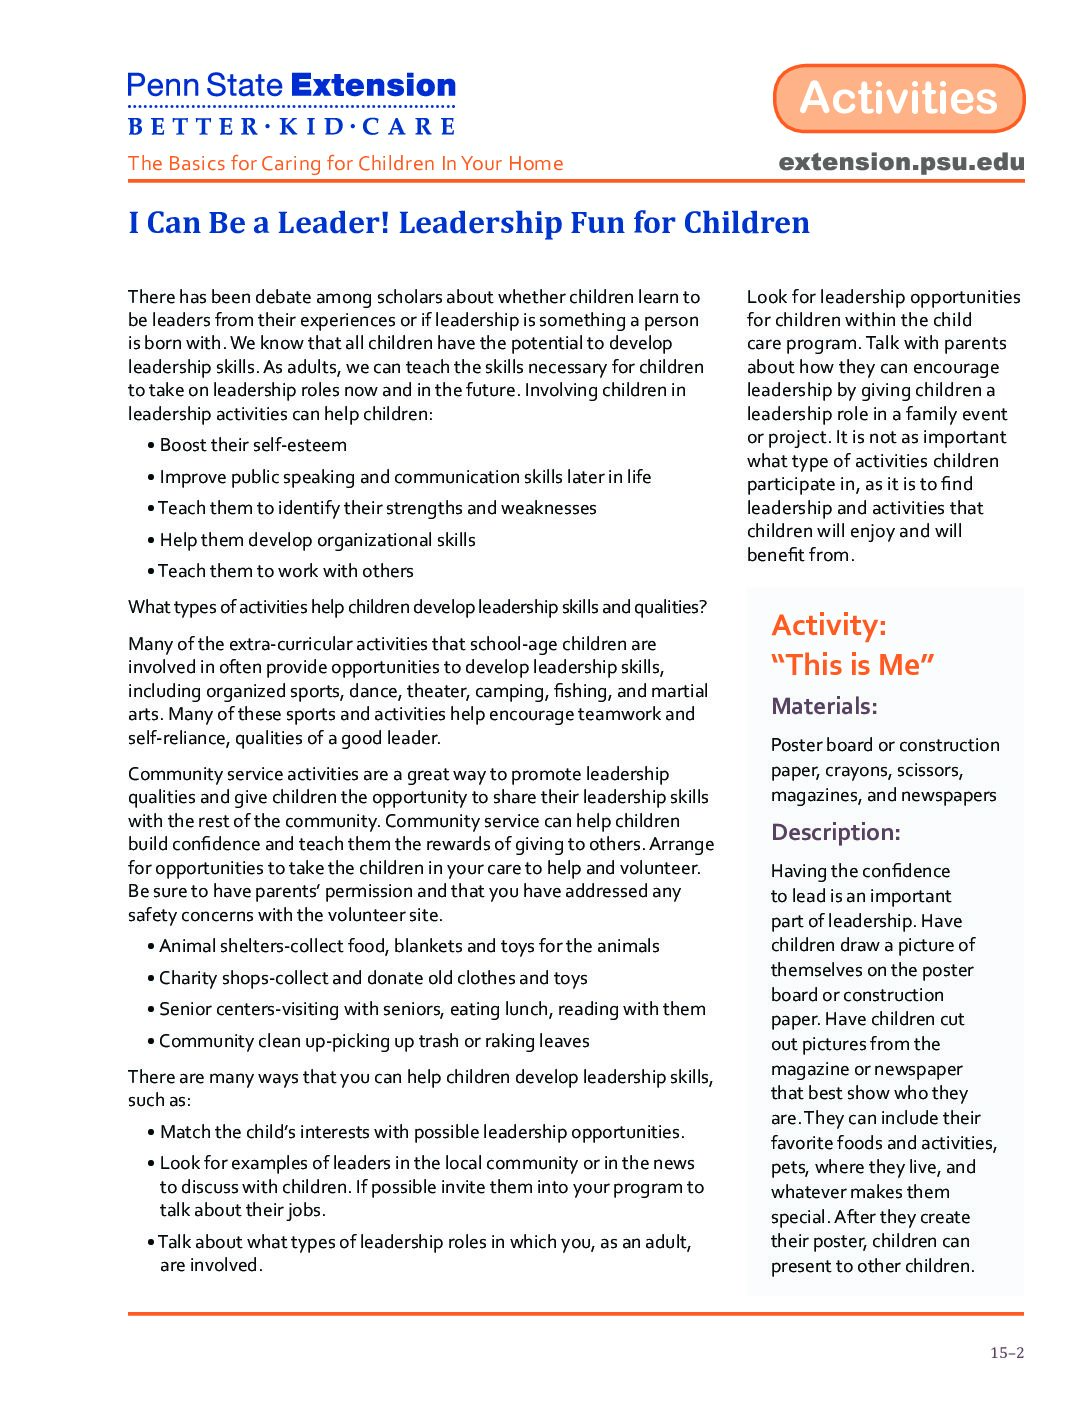 Leadership fo Children